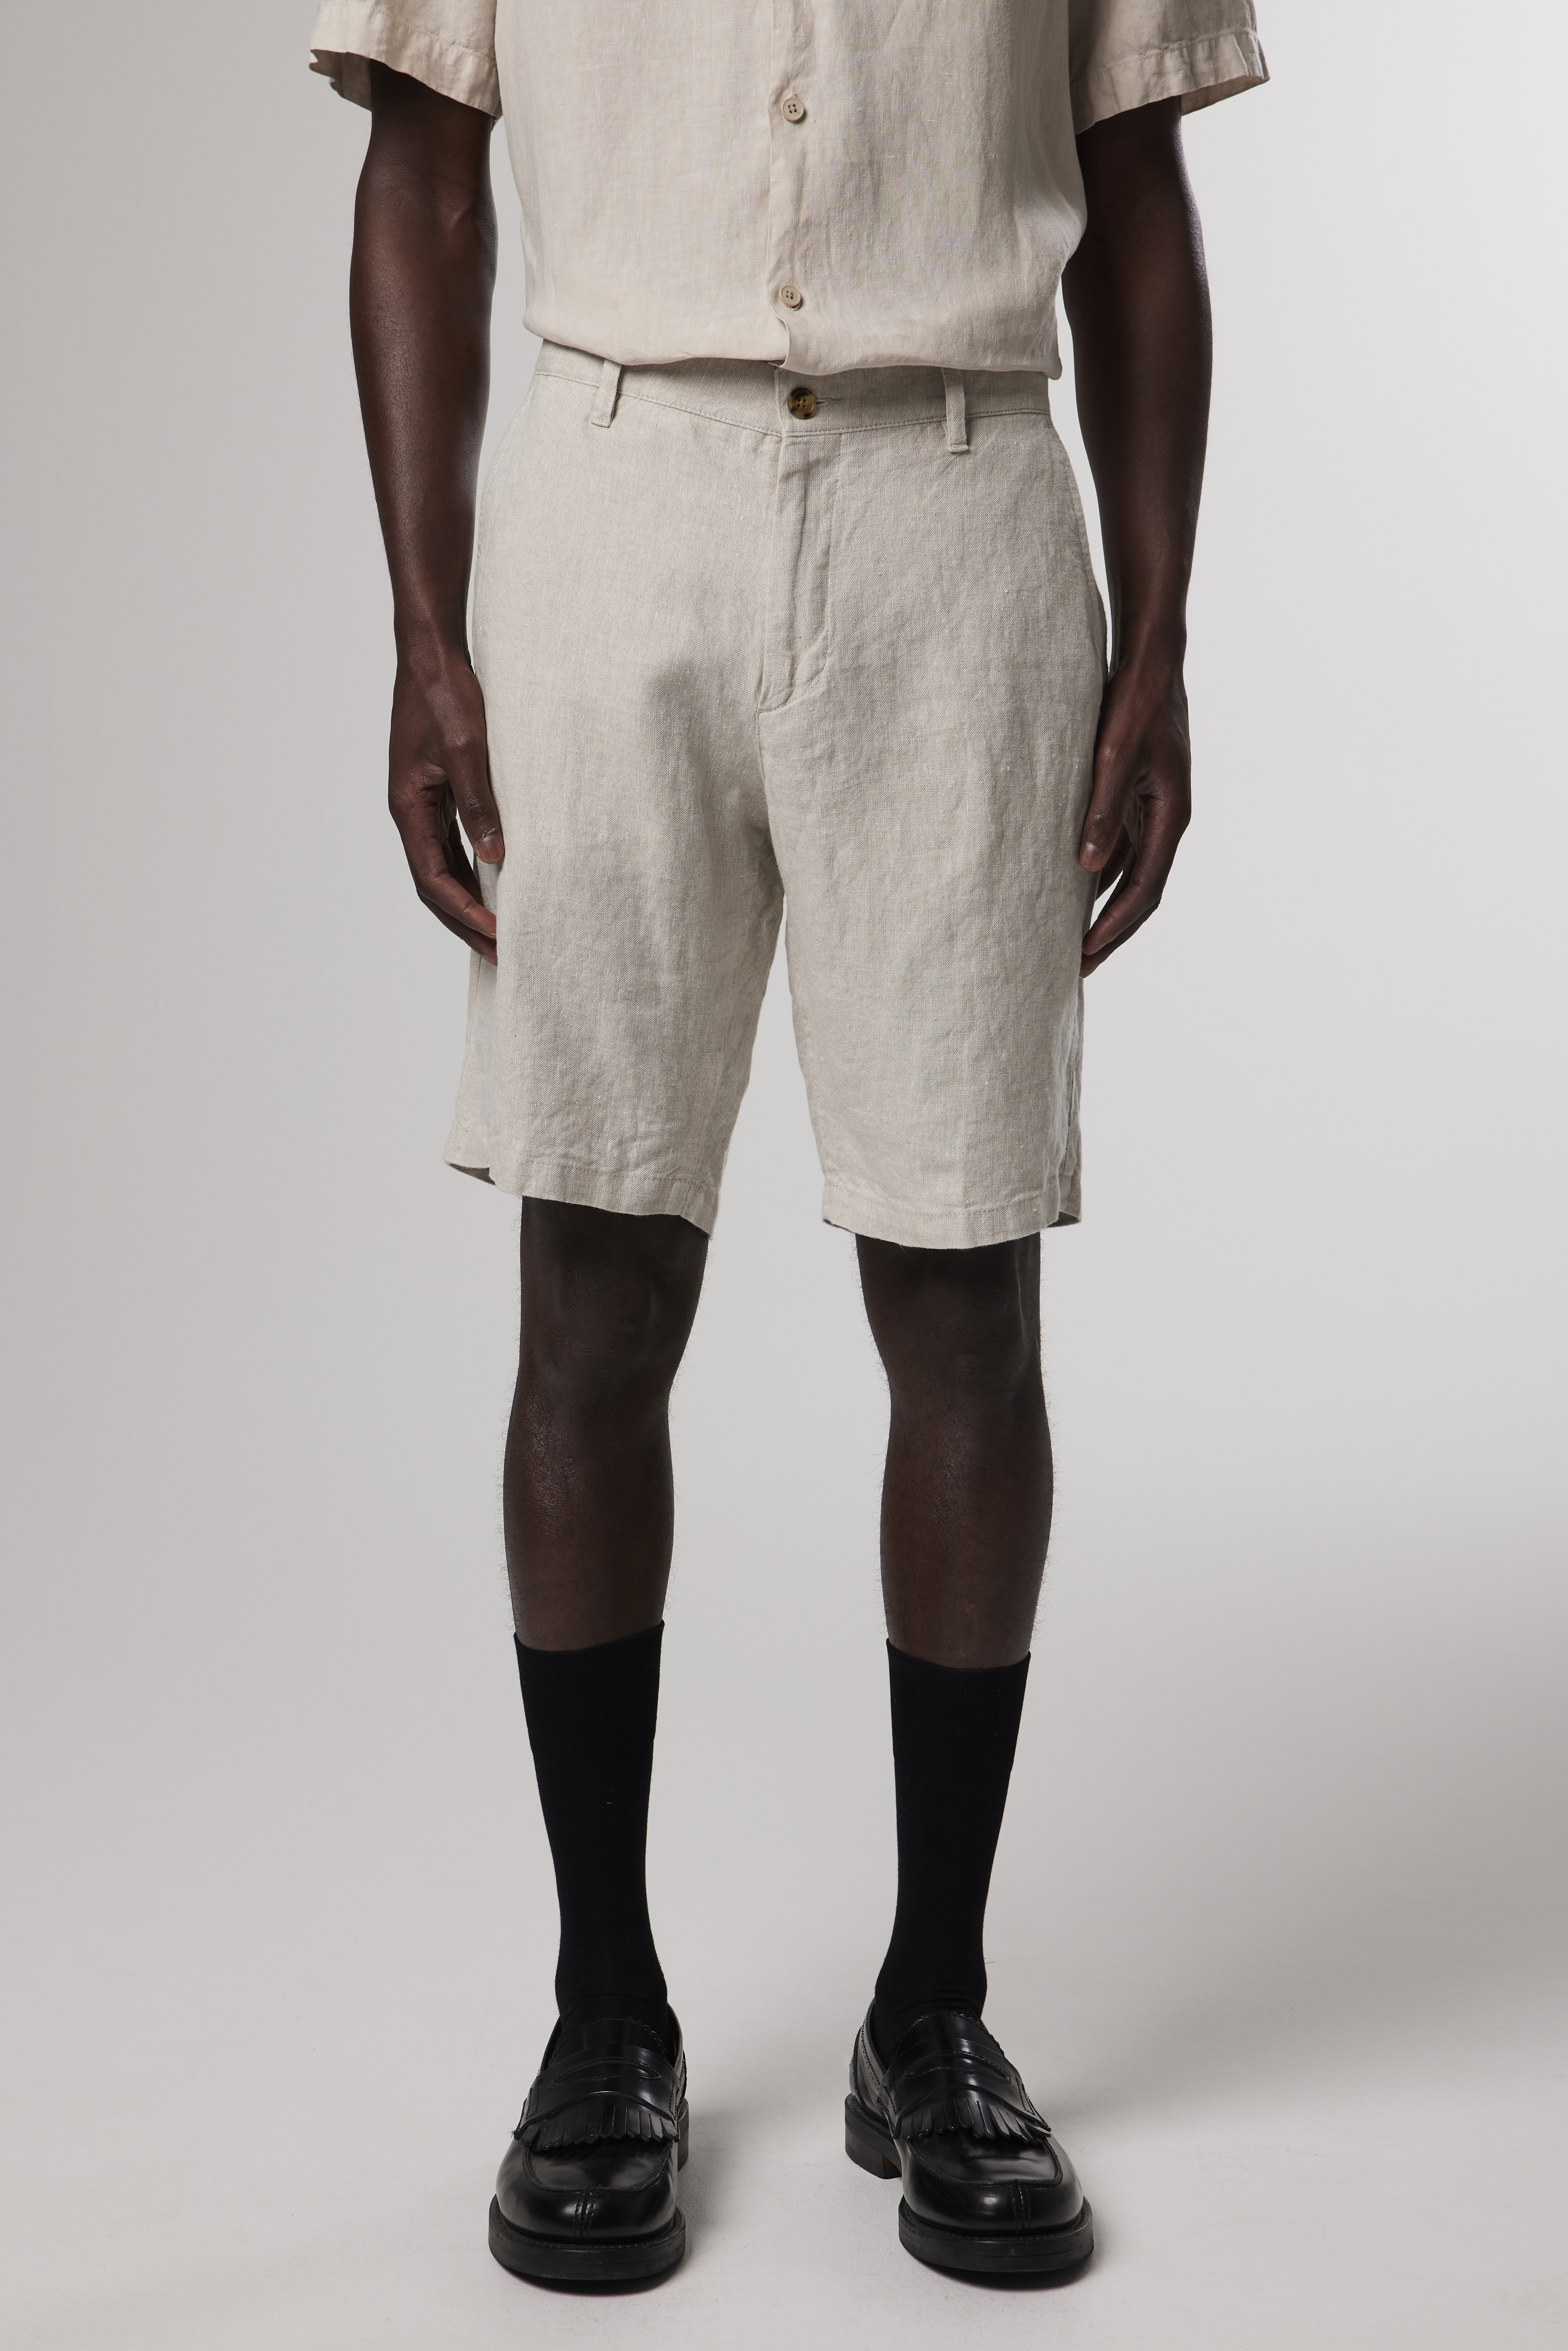 Crown 1196 men's shorts - White - Buy online at NN07®